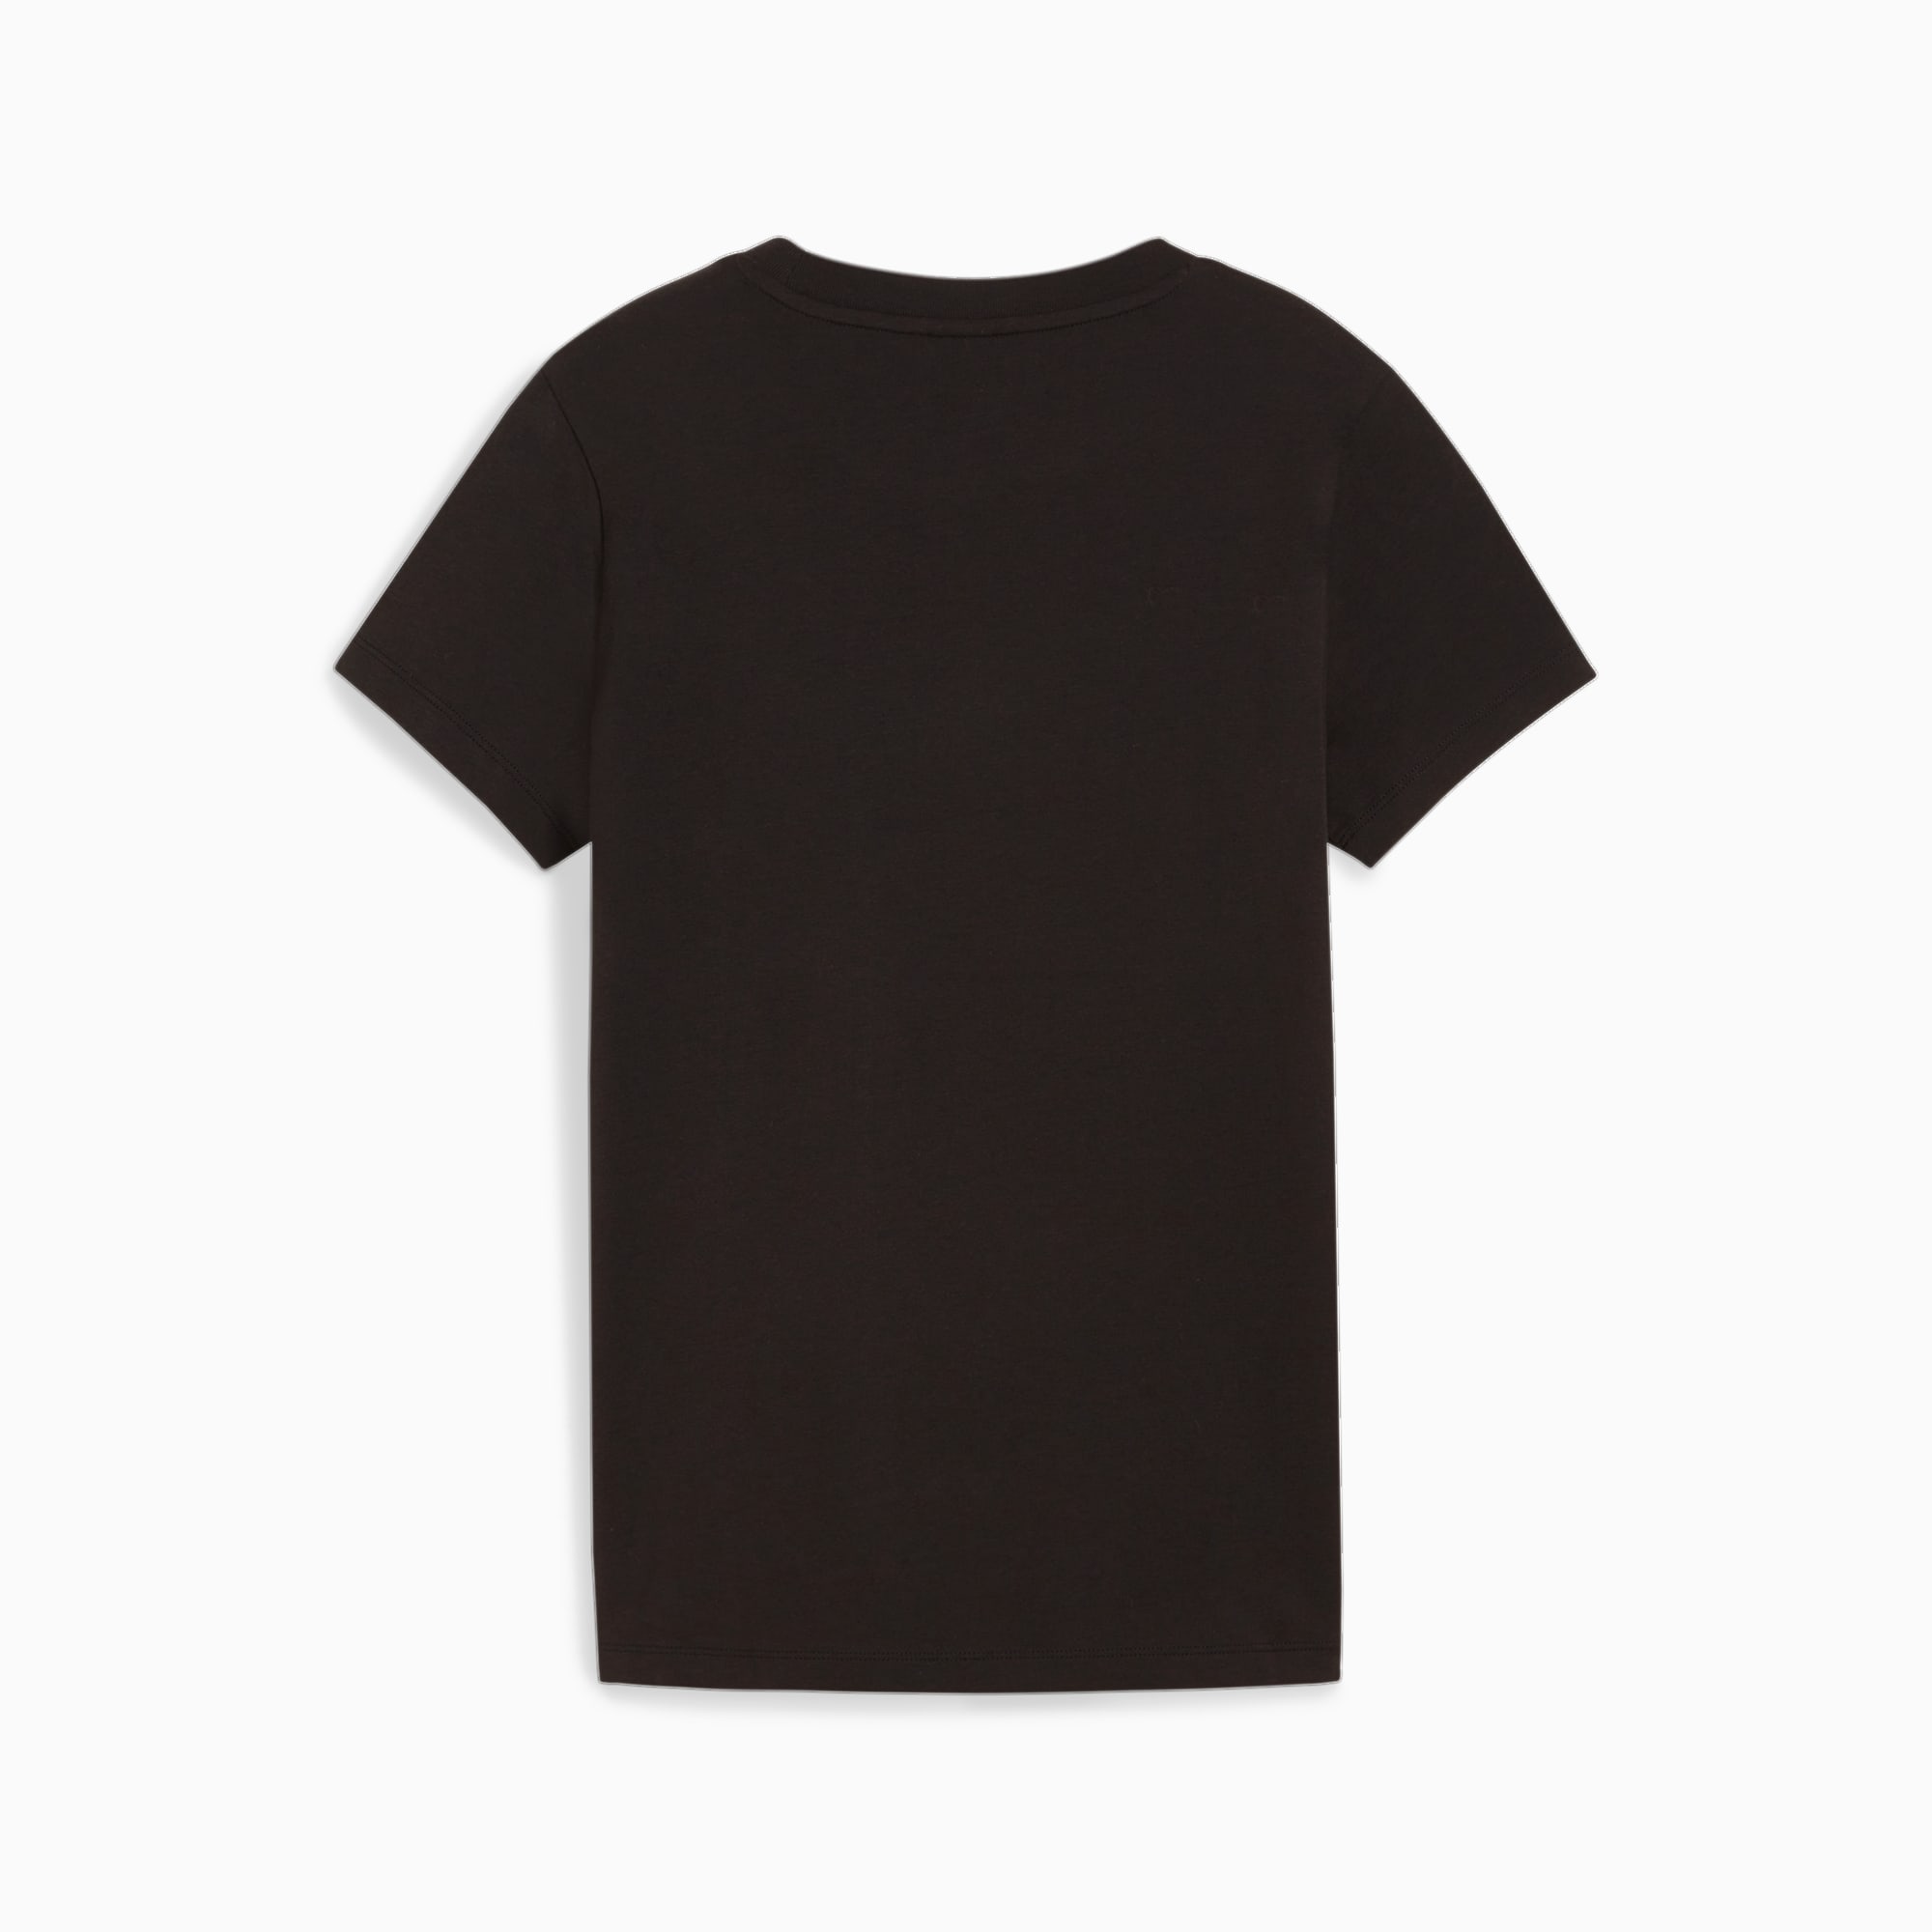 PUMA Classics Shiny Logo Women's T-Shirt, Black, Size M, Clothing